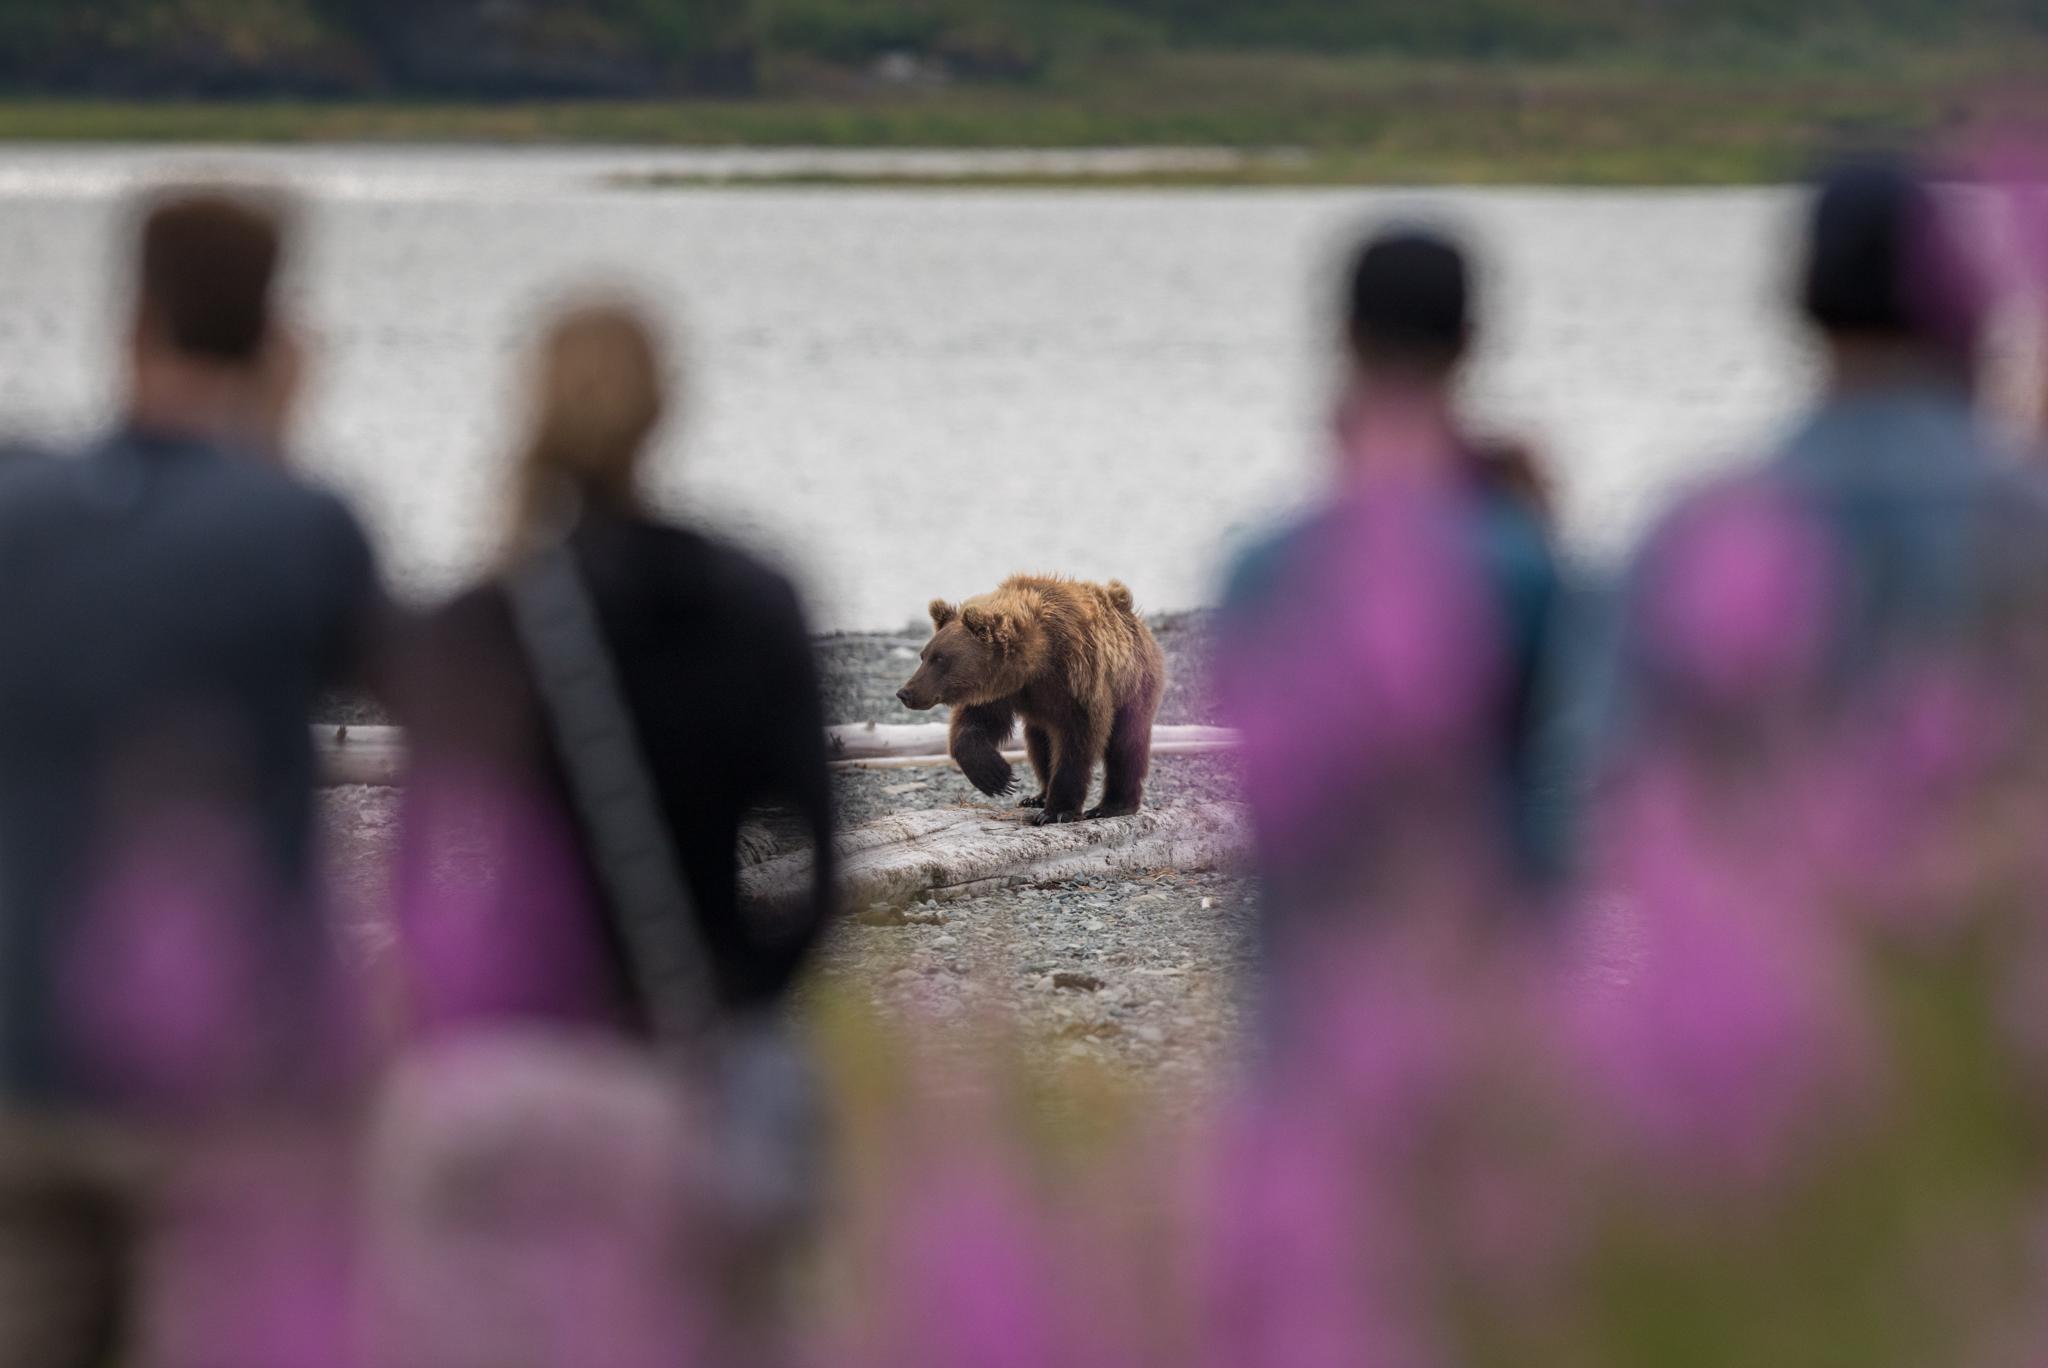 Alaskan Brown Bears Threatened by Proposed Mine